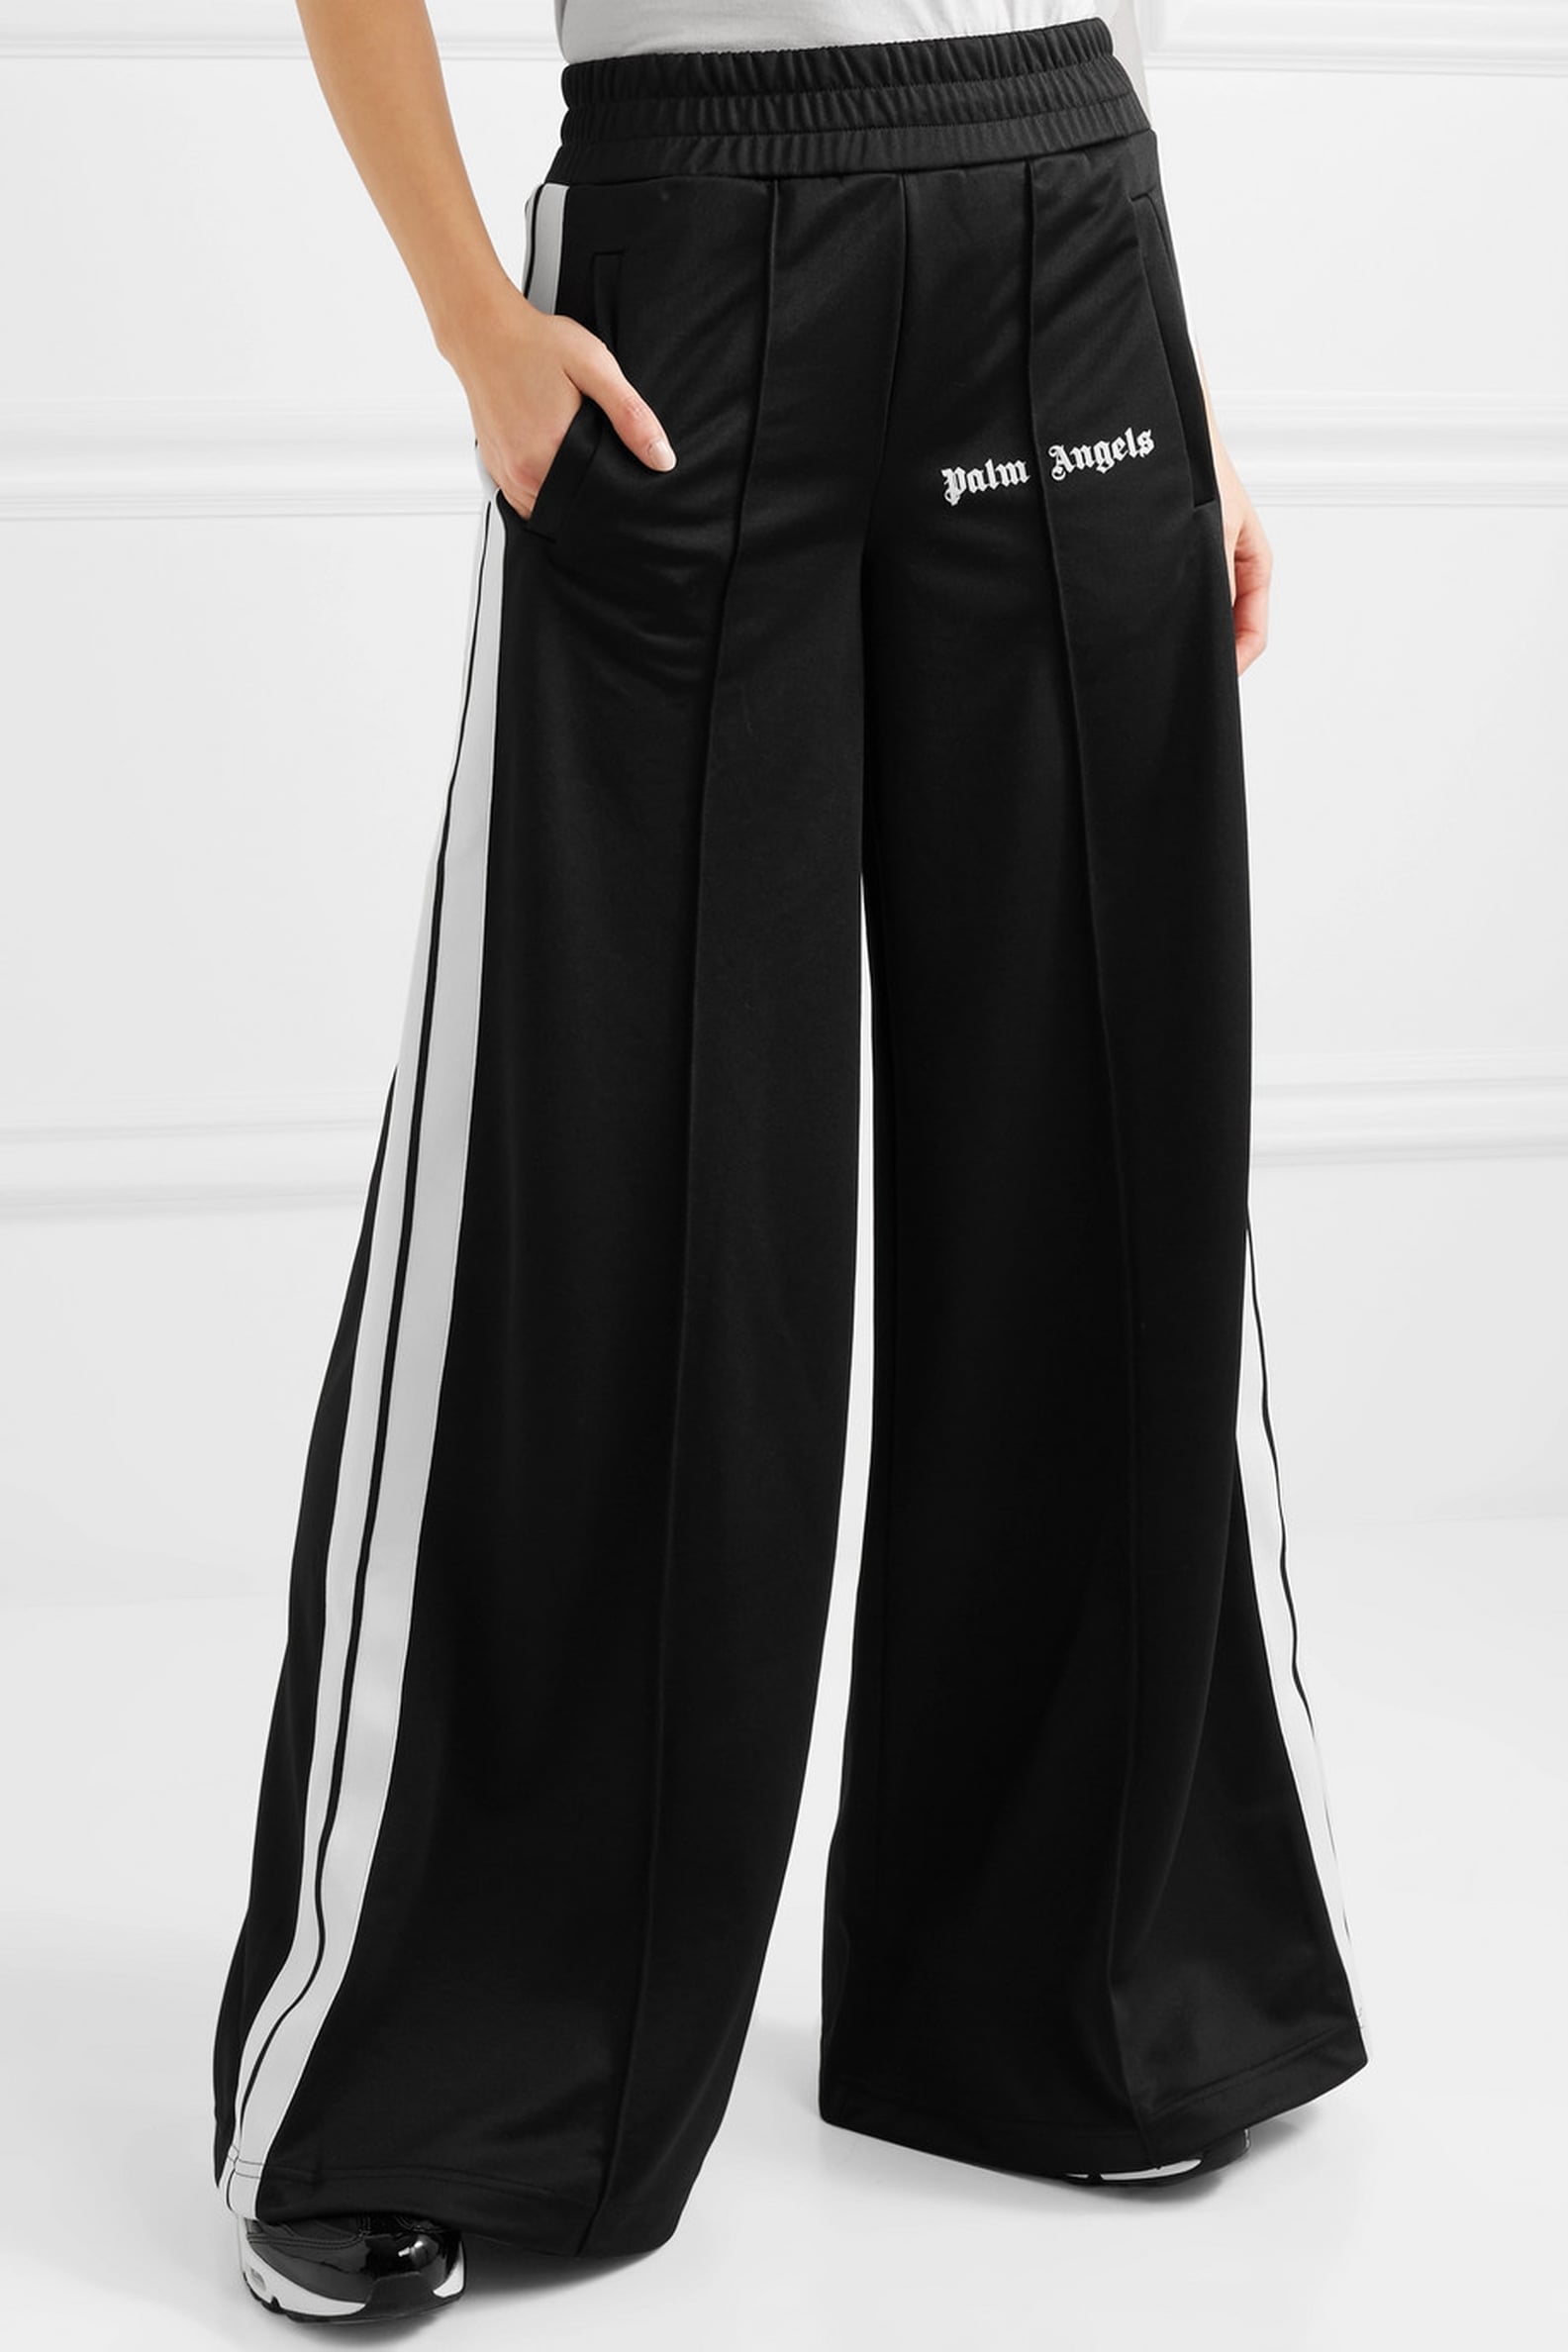 Ashley Graham Green Crop Top and Track Pants | POPSUGAR Fashion